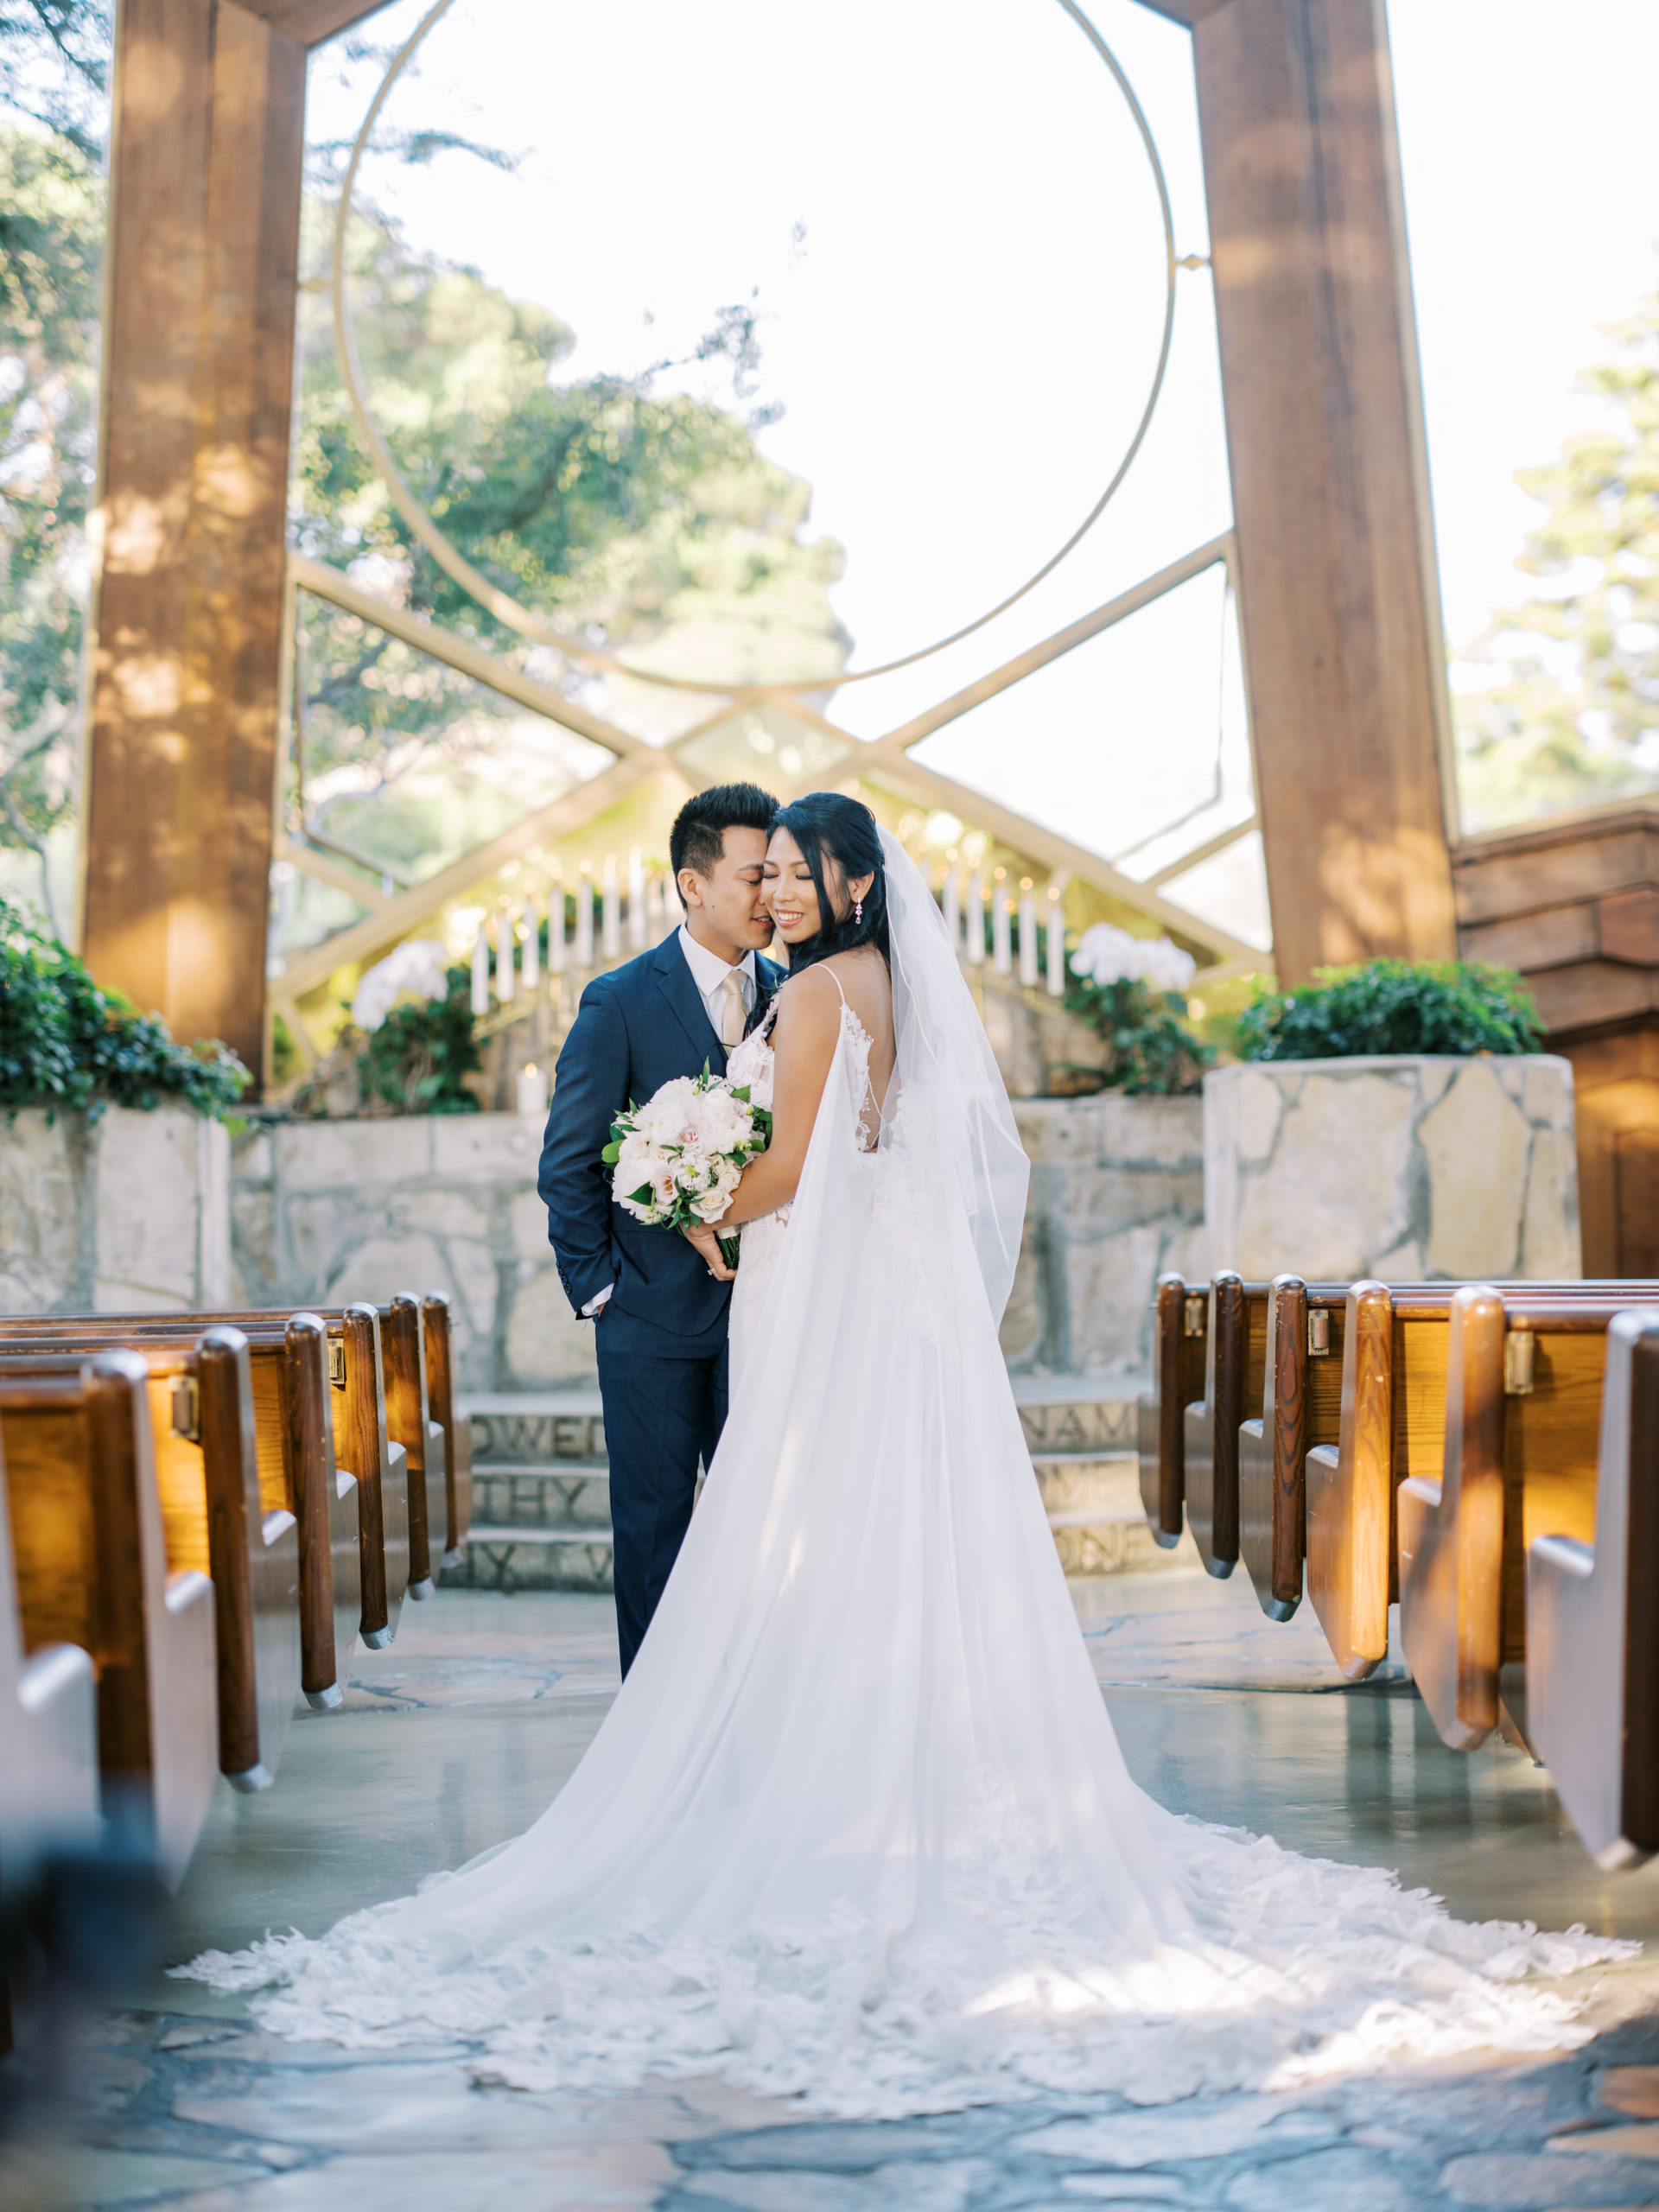 Top Rancho Palos Verdes Wedding Photographer - Wayfarers Chapel